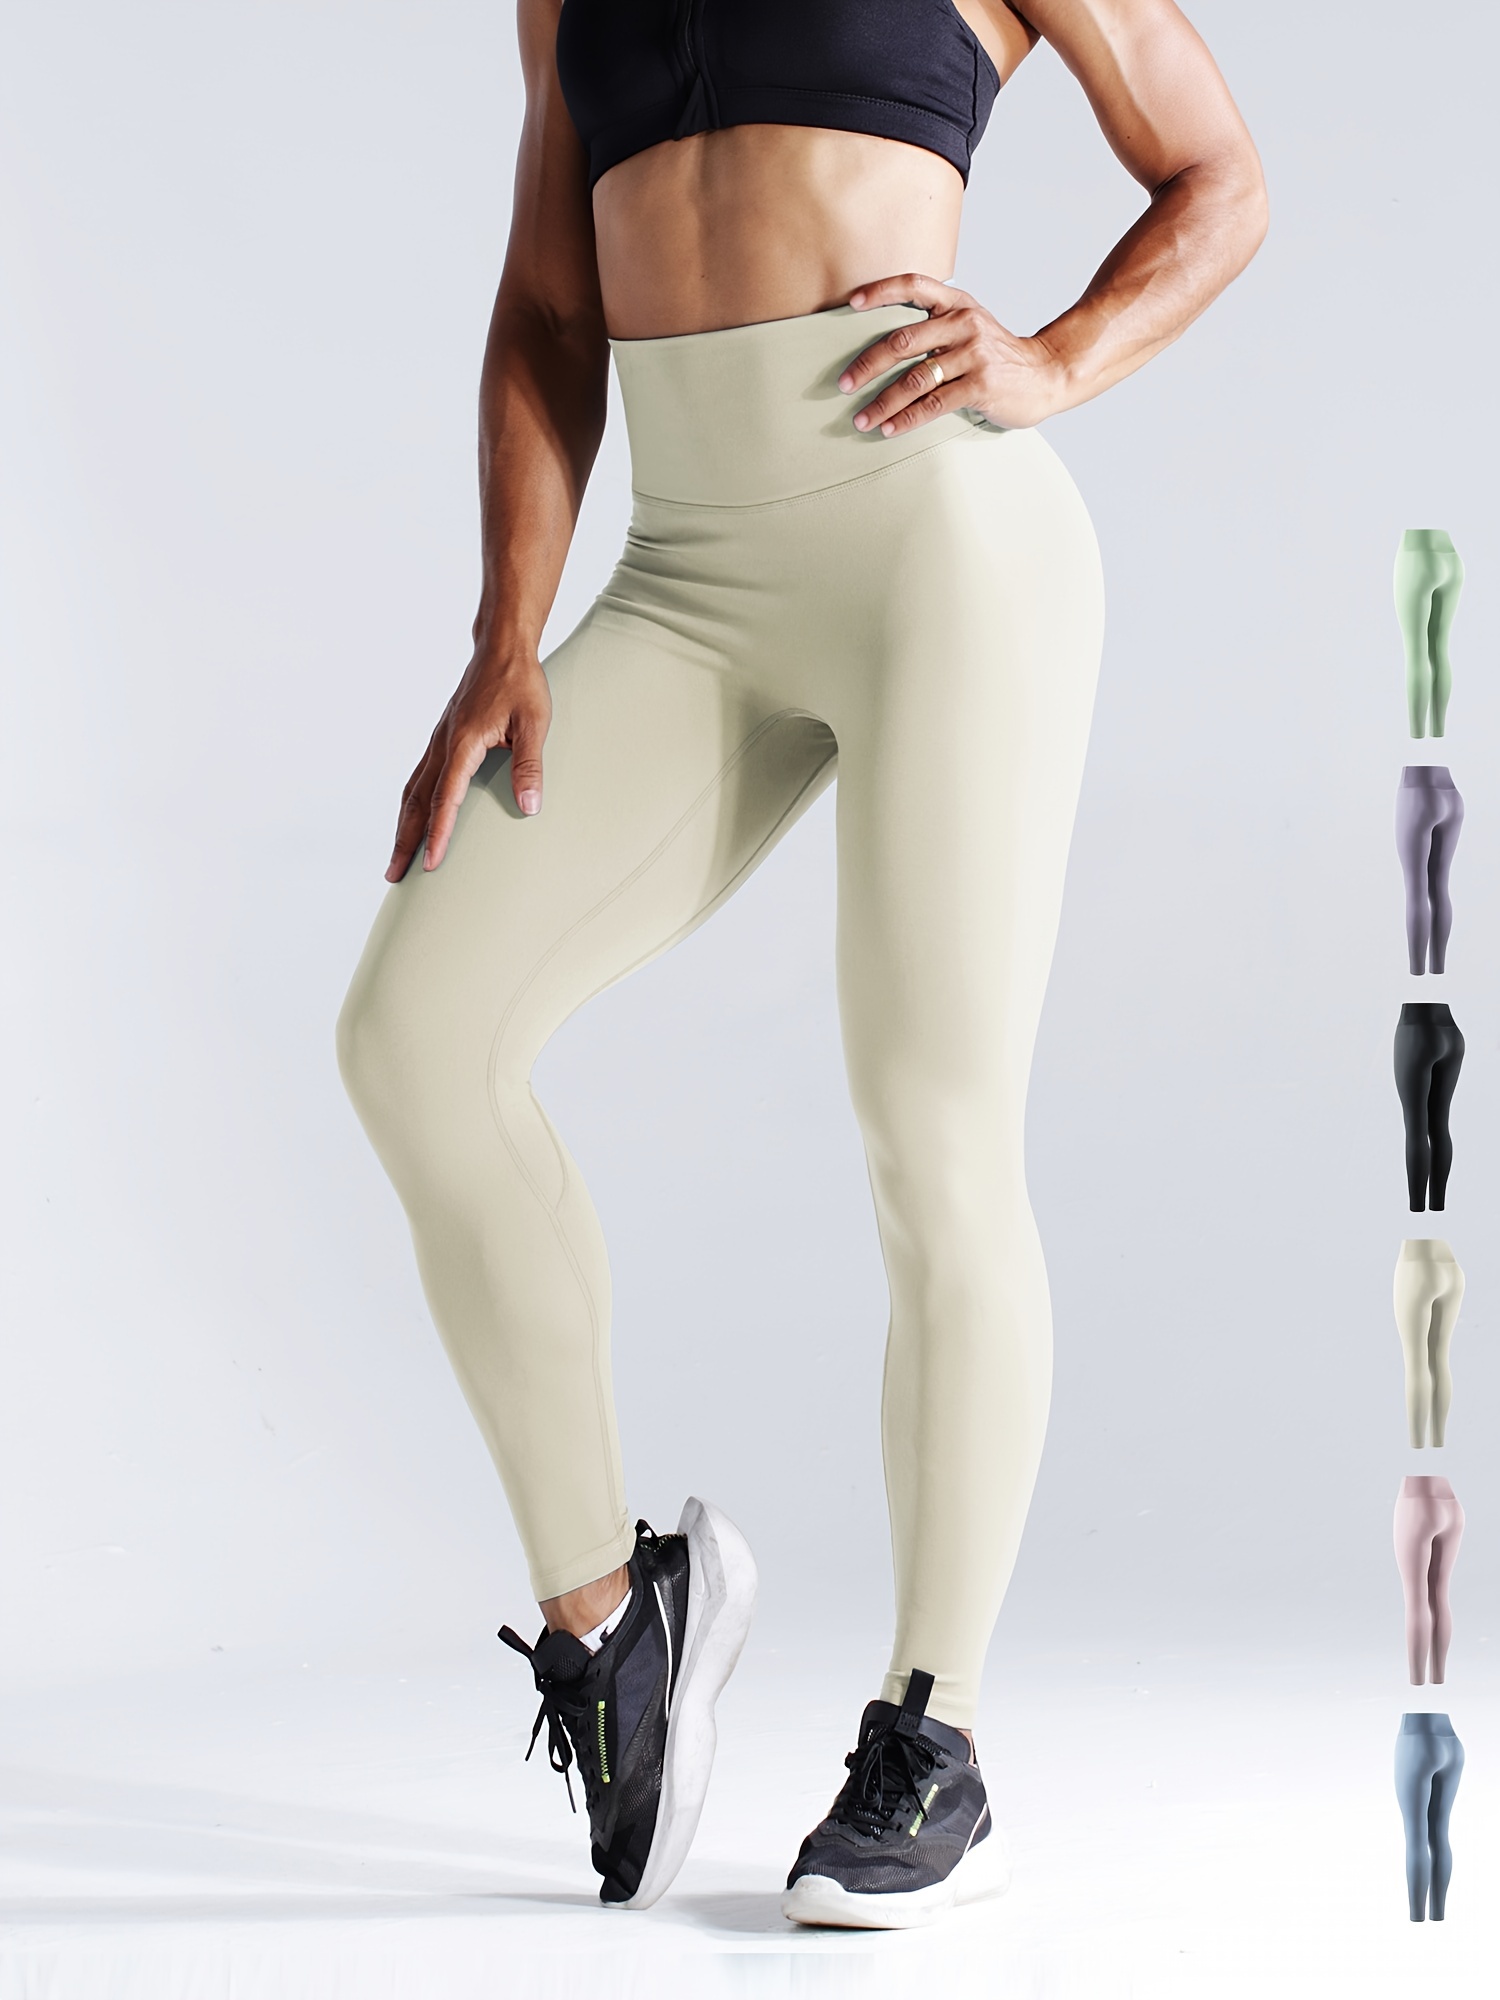 KIHOUT Women Solid Sport Fitness Yoga Pants Elasticity Breathable High  Waist Pants 